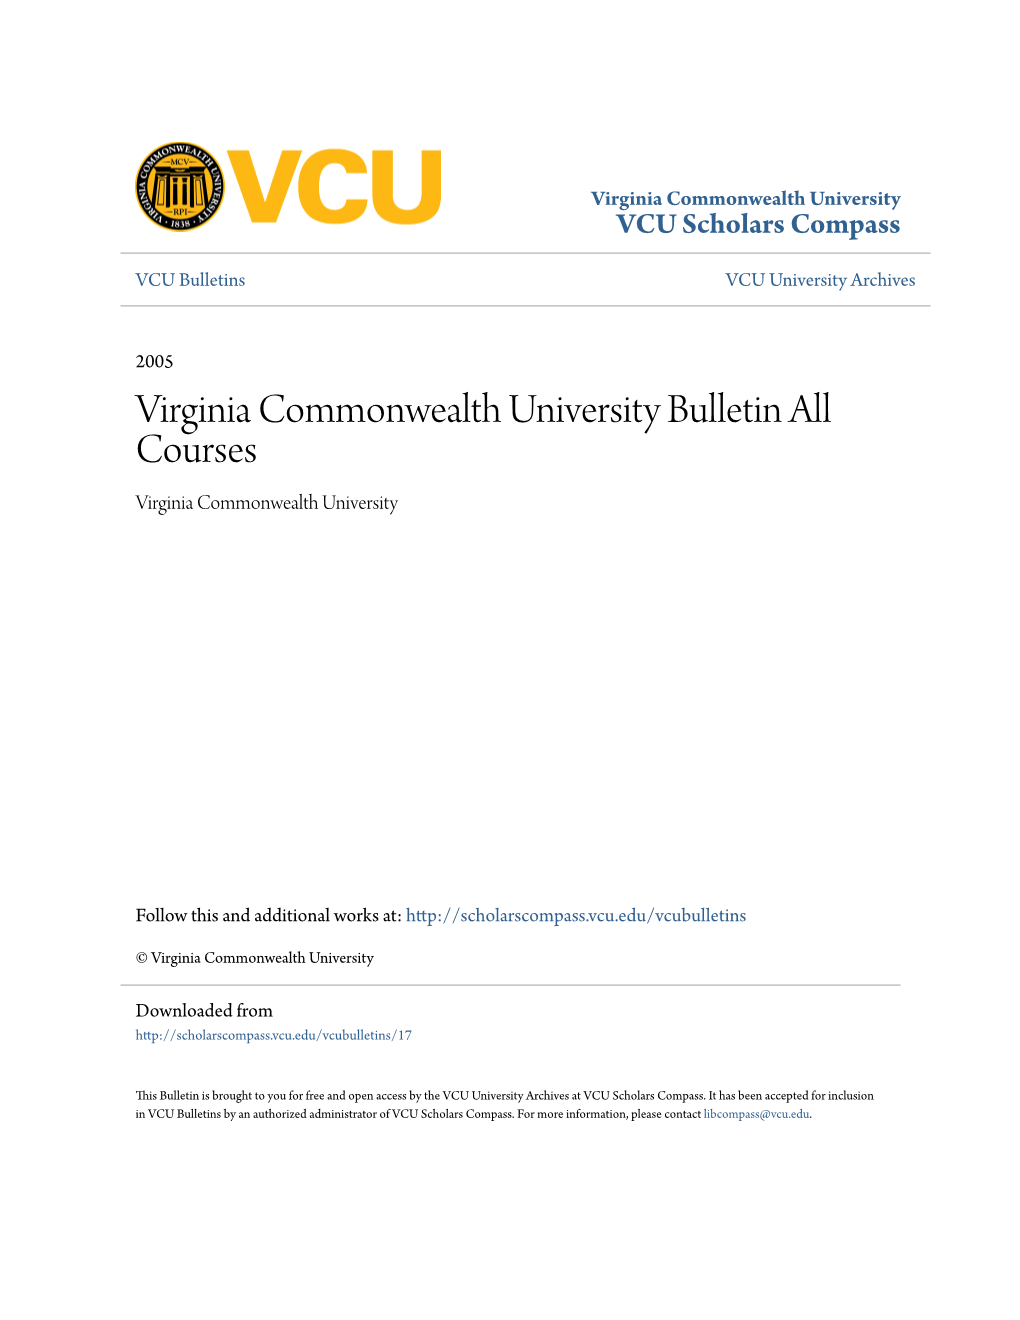 Virginia Commonwealth University Bulletin All Courses Virginia Commonwealth University